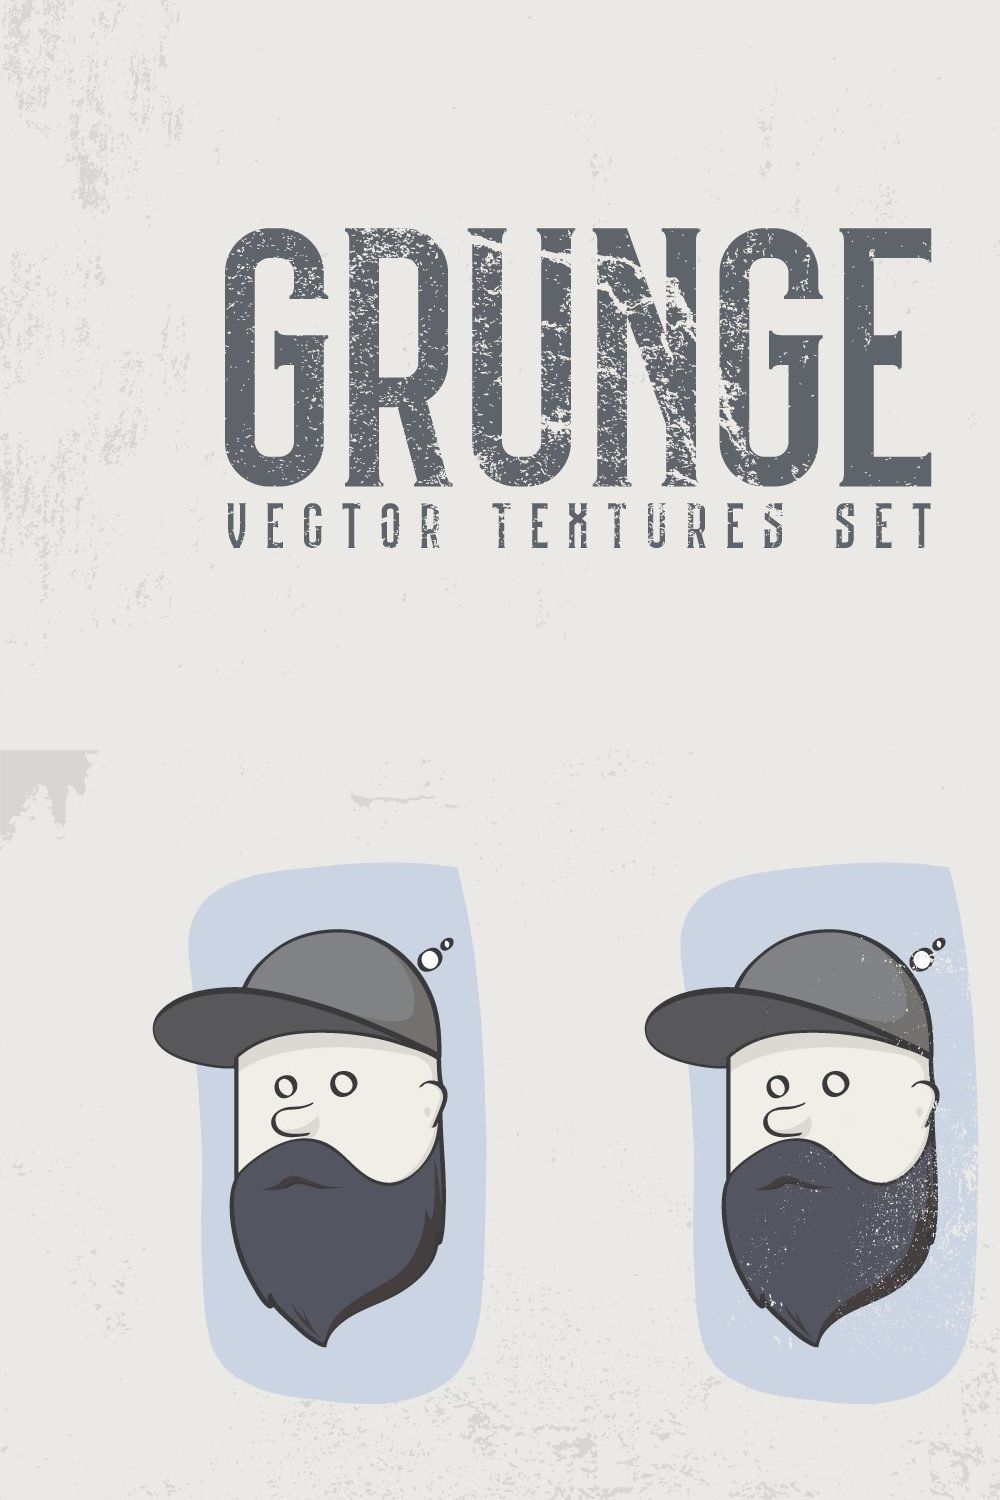 True Grunge Vector Textures pinterest preview image.